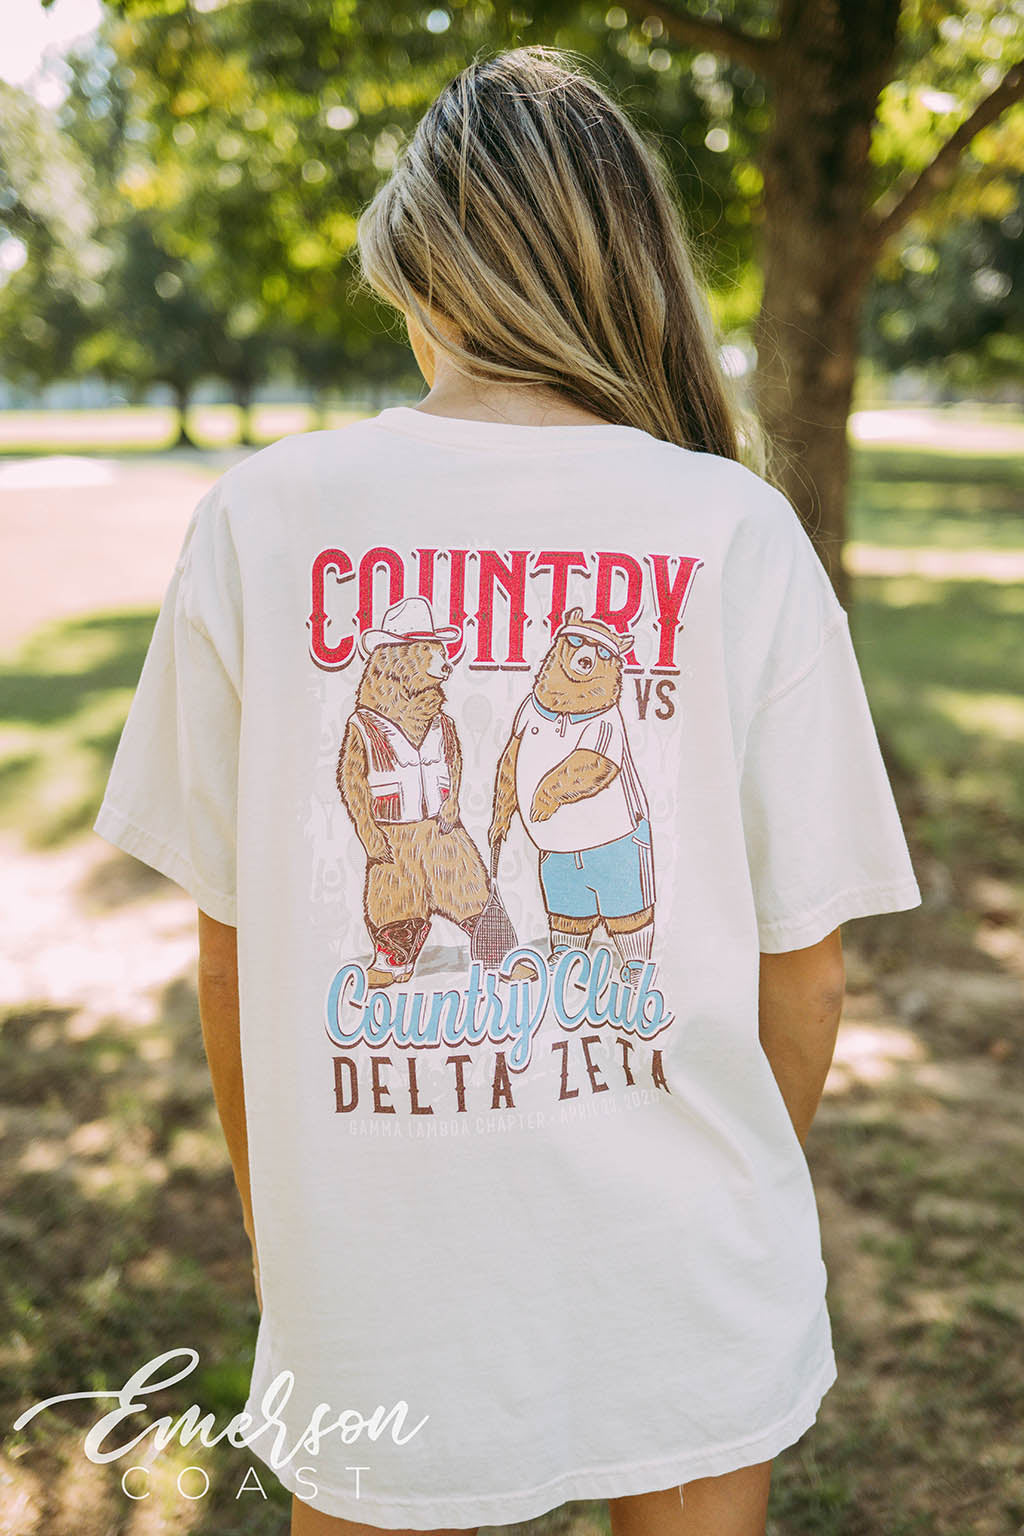 Delta Zeta Social Country vs Country Club Tee